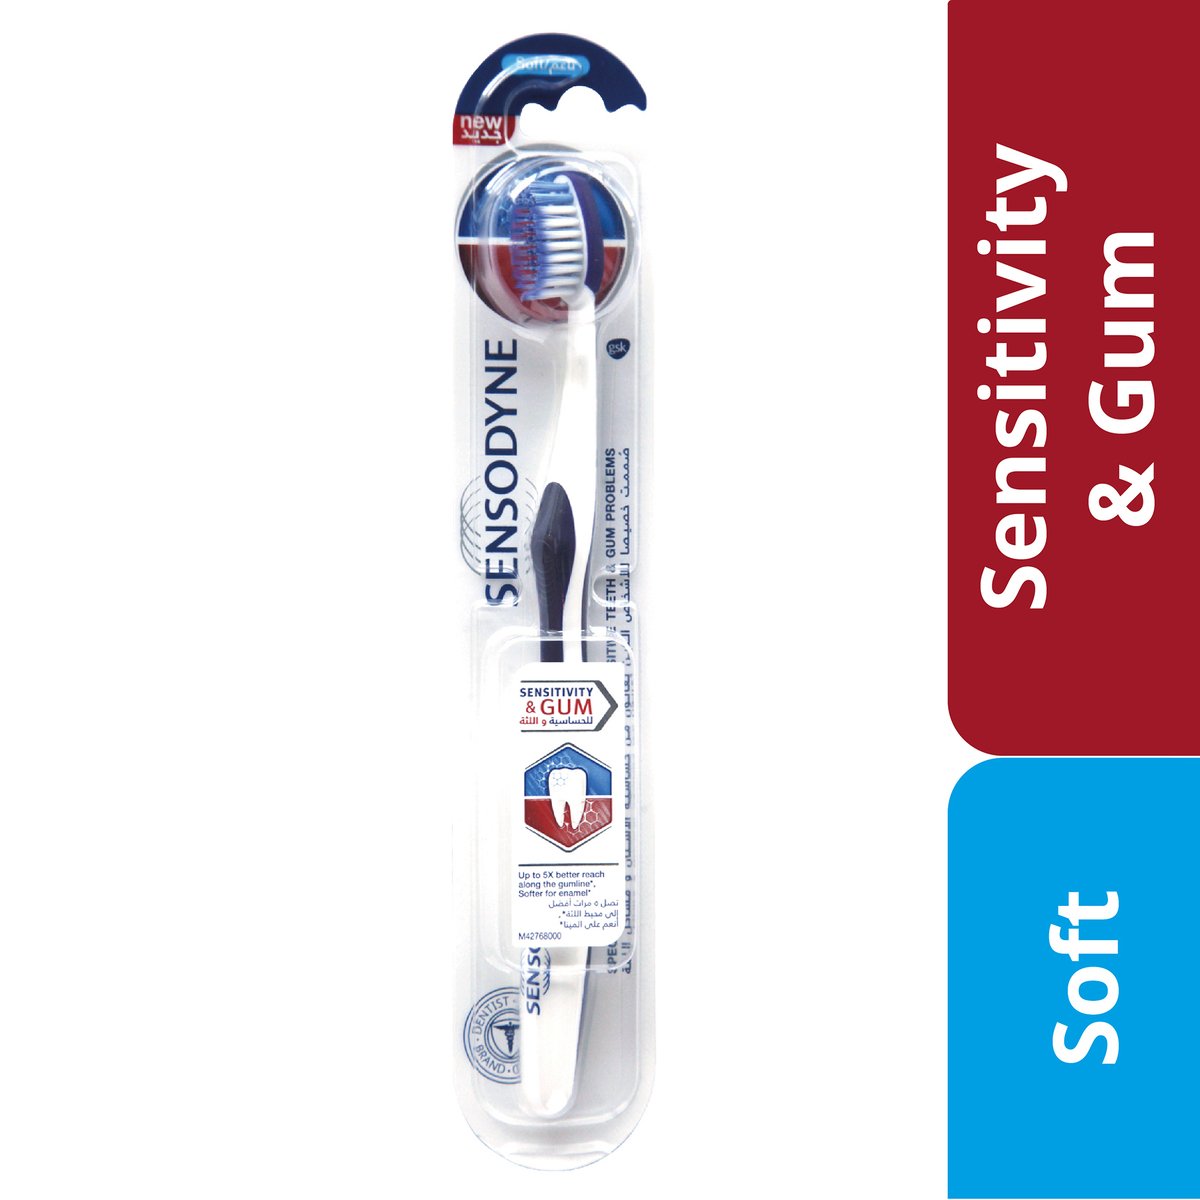 Sensodyne Toothbrush Sensitivity & Gum Soft Assorted Color, 1 pc